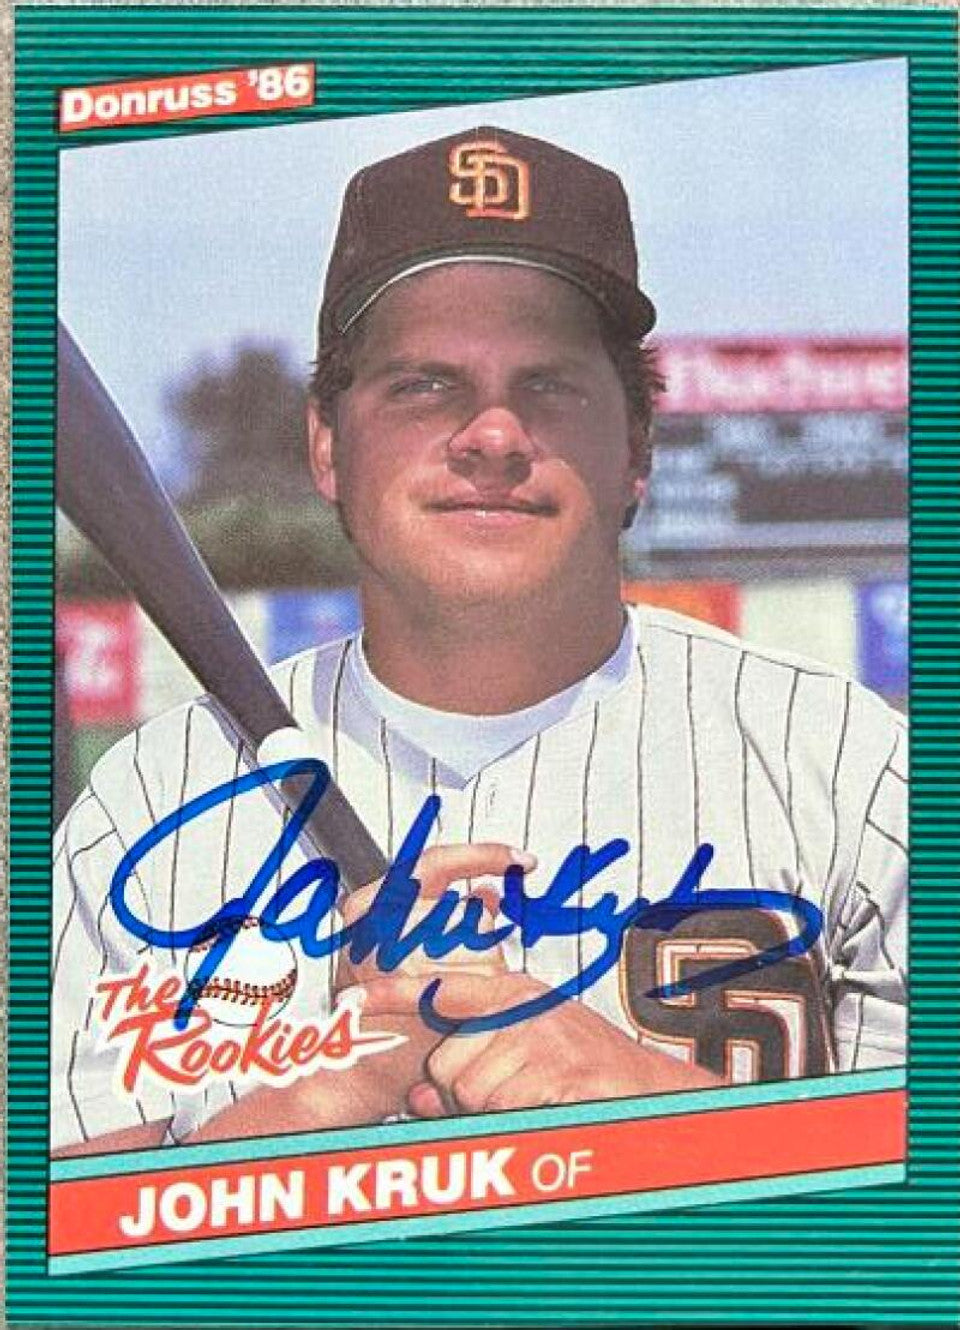 John Kruk Signed 1986 Donruss Rookies Baseball Card - San Diego Padres